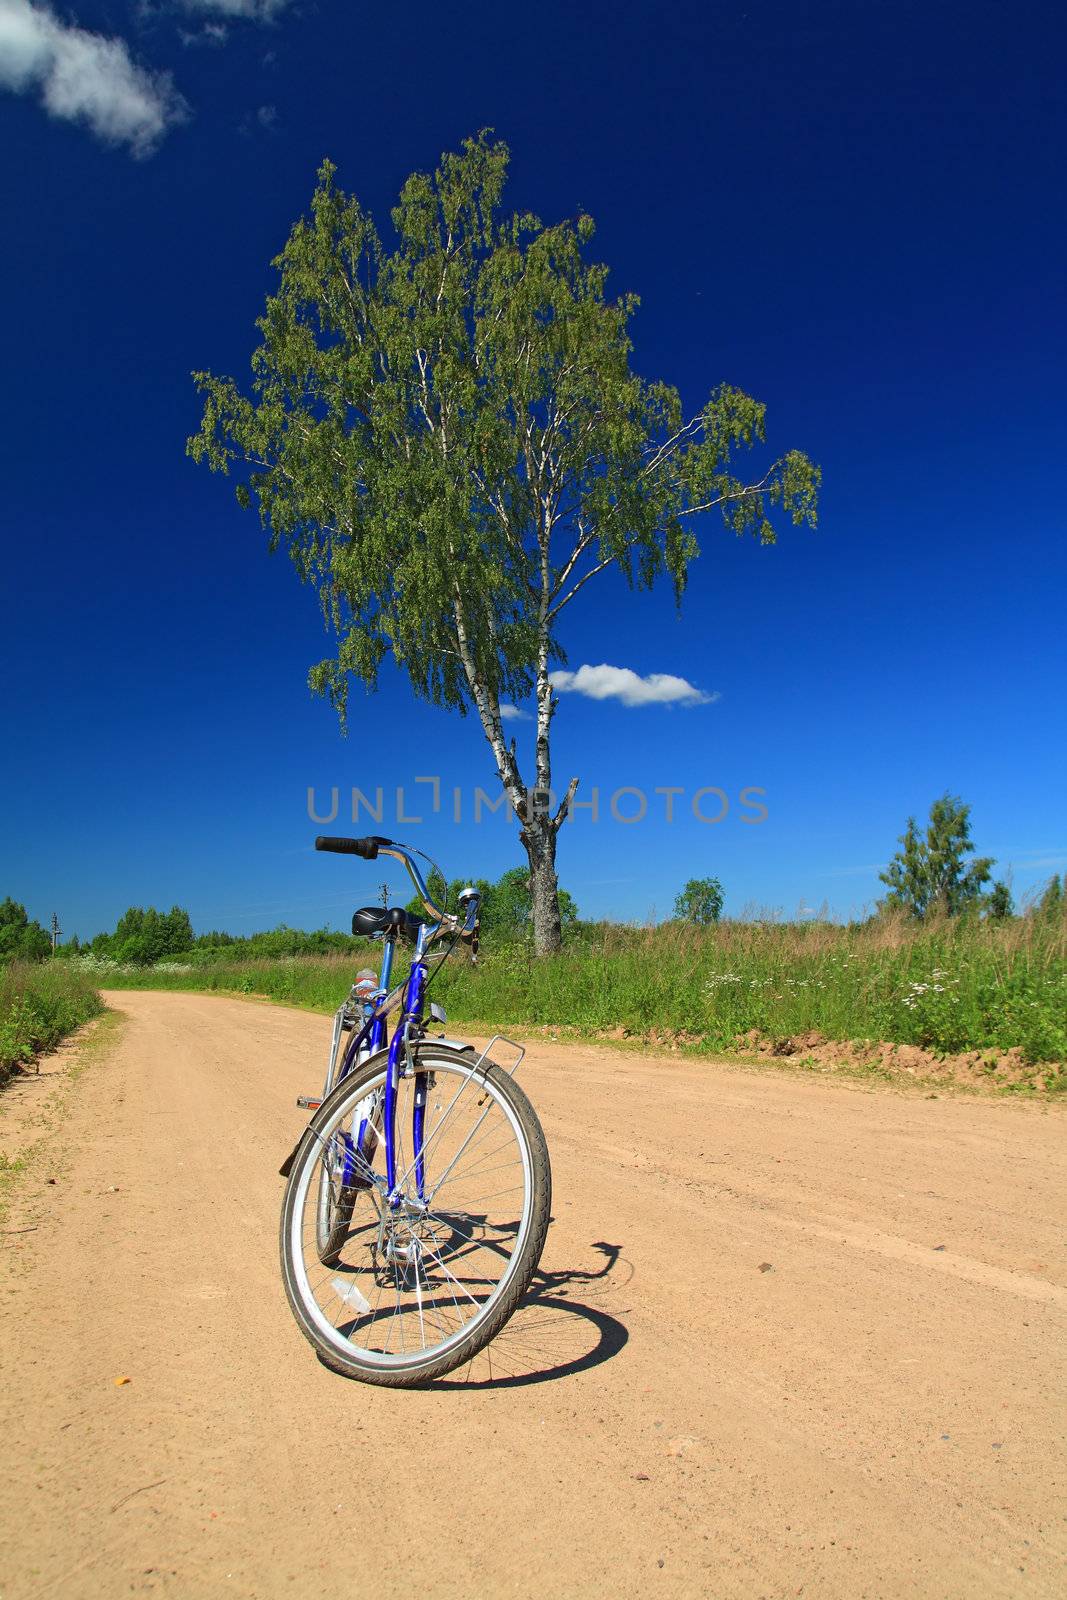 bicycle on rural sandy road by basel101658